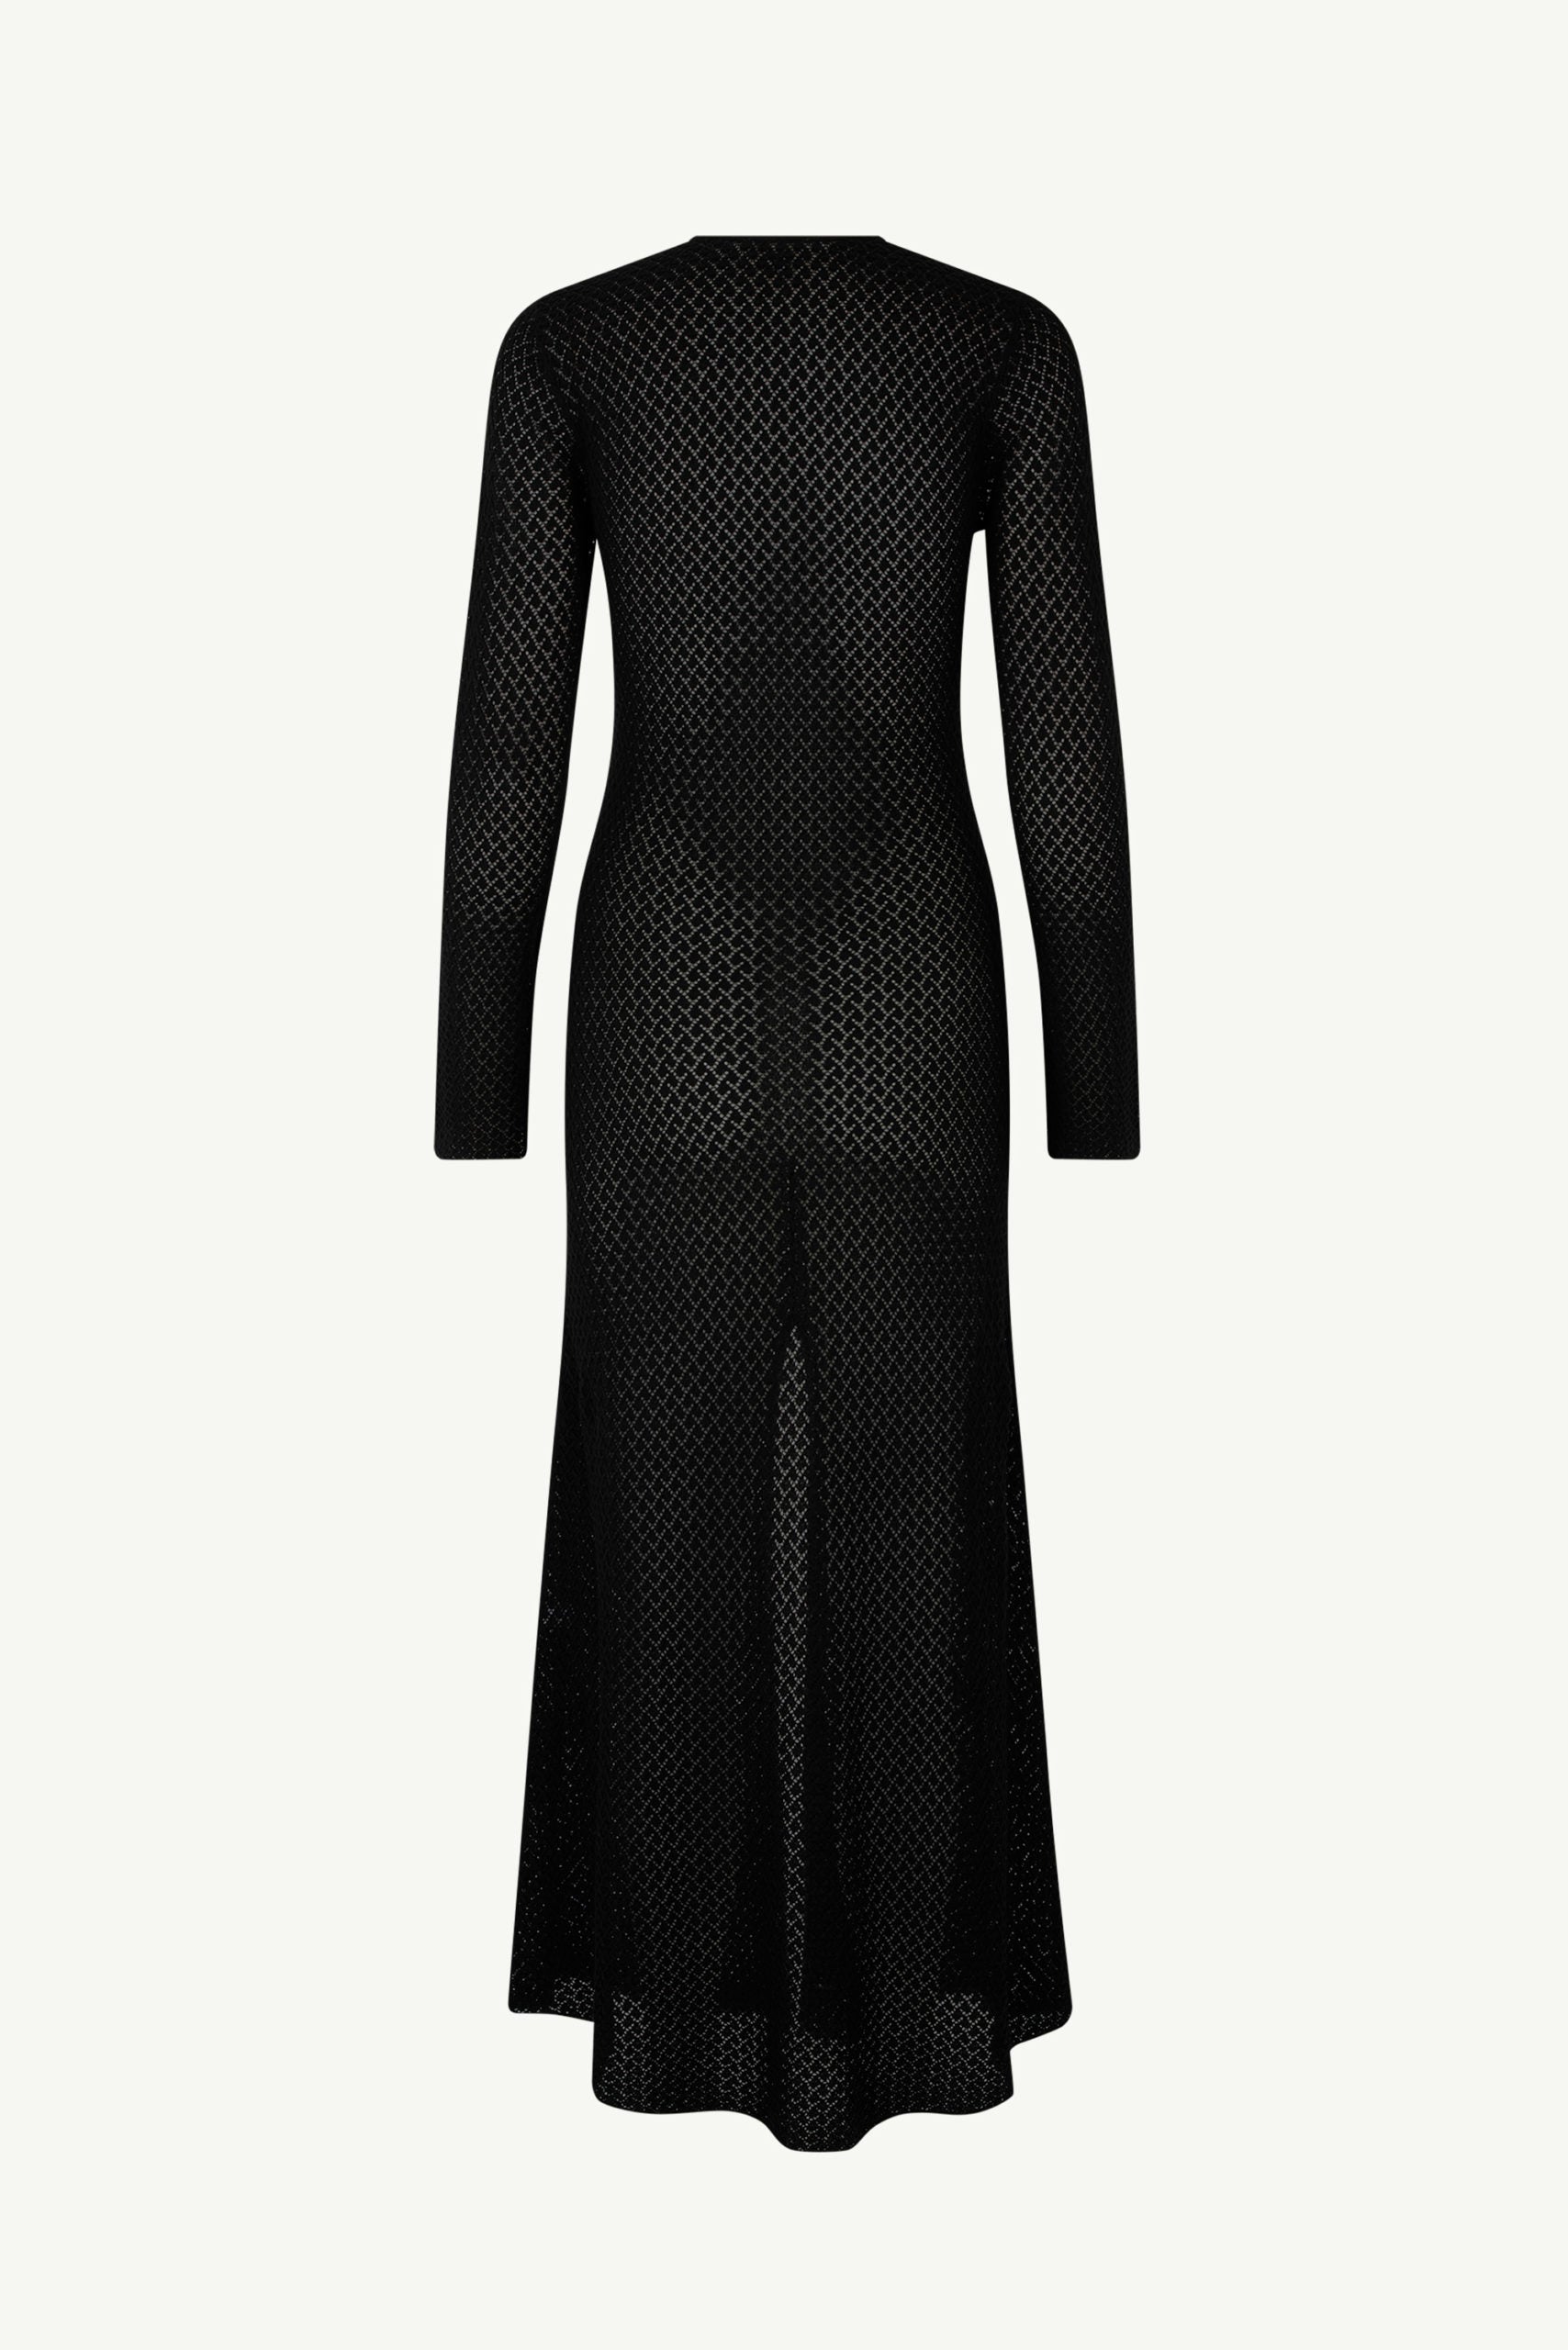 The Garment Tanzania Dress in Black